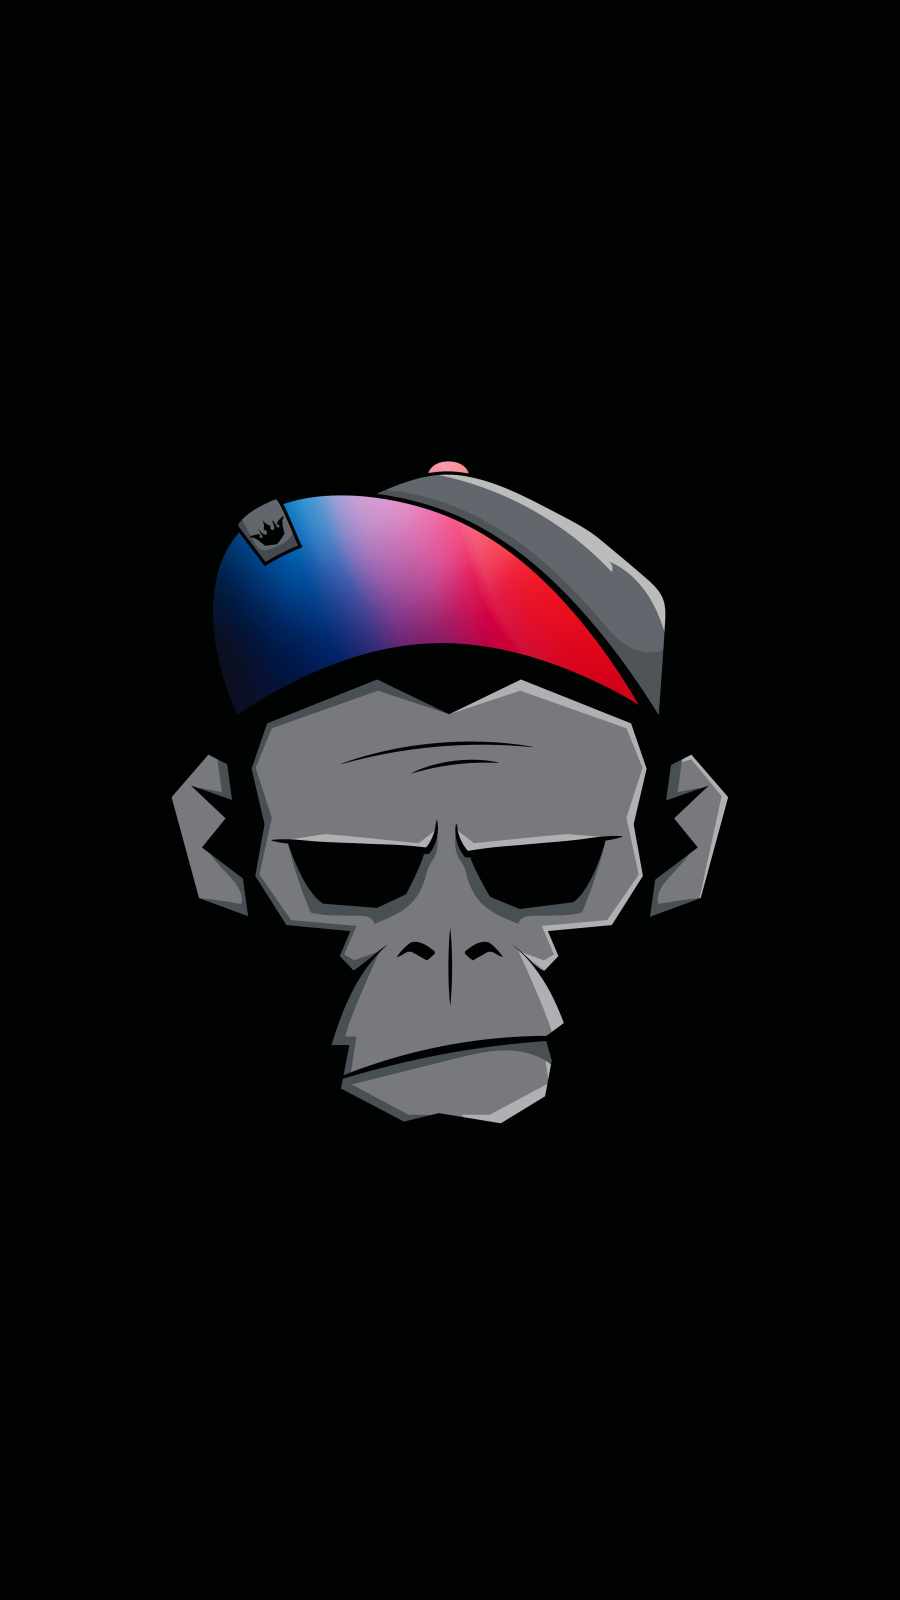 Gorilla iPhone Wallpaper